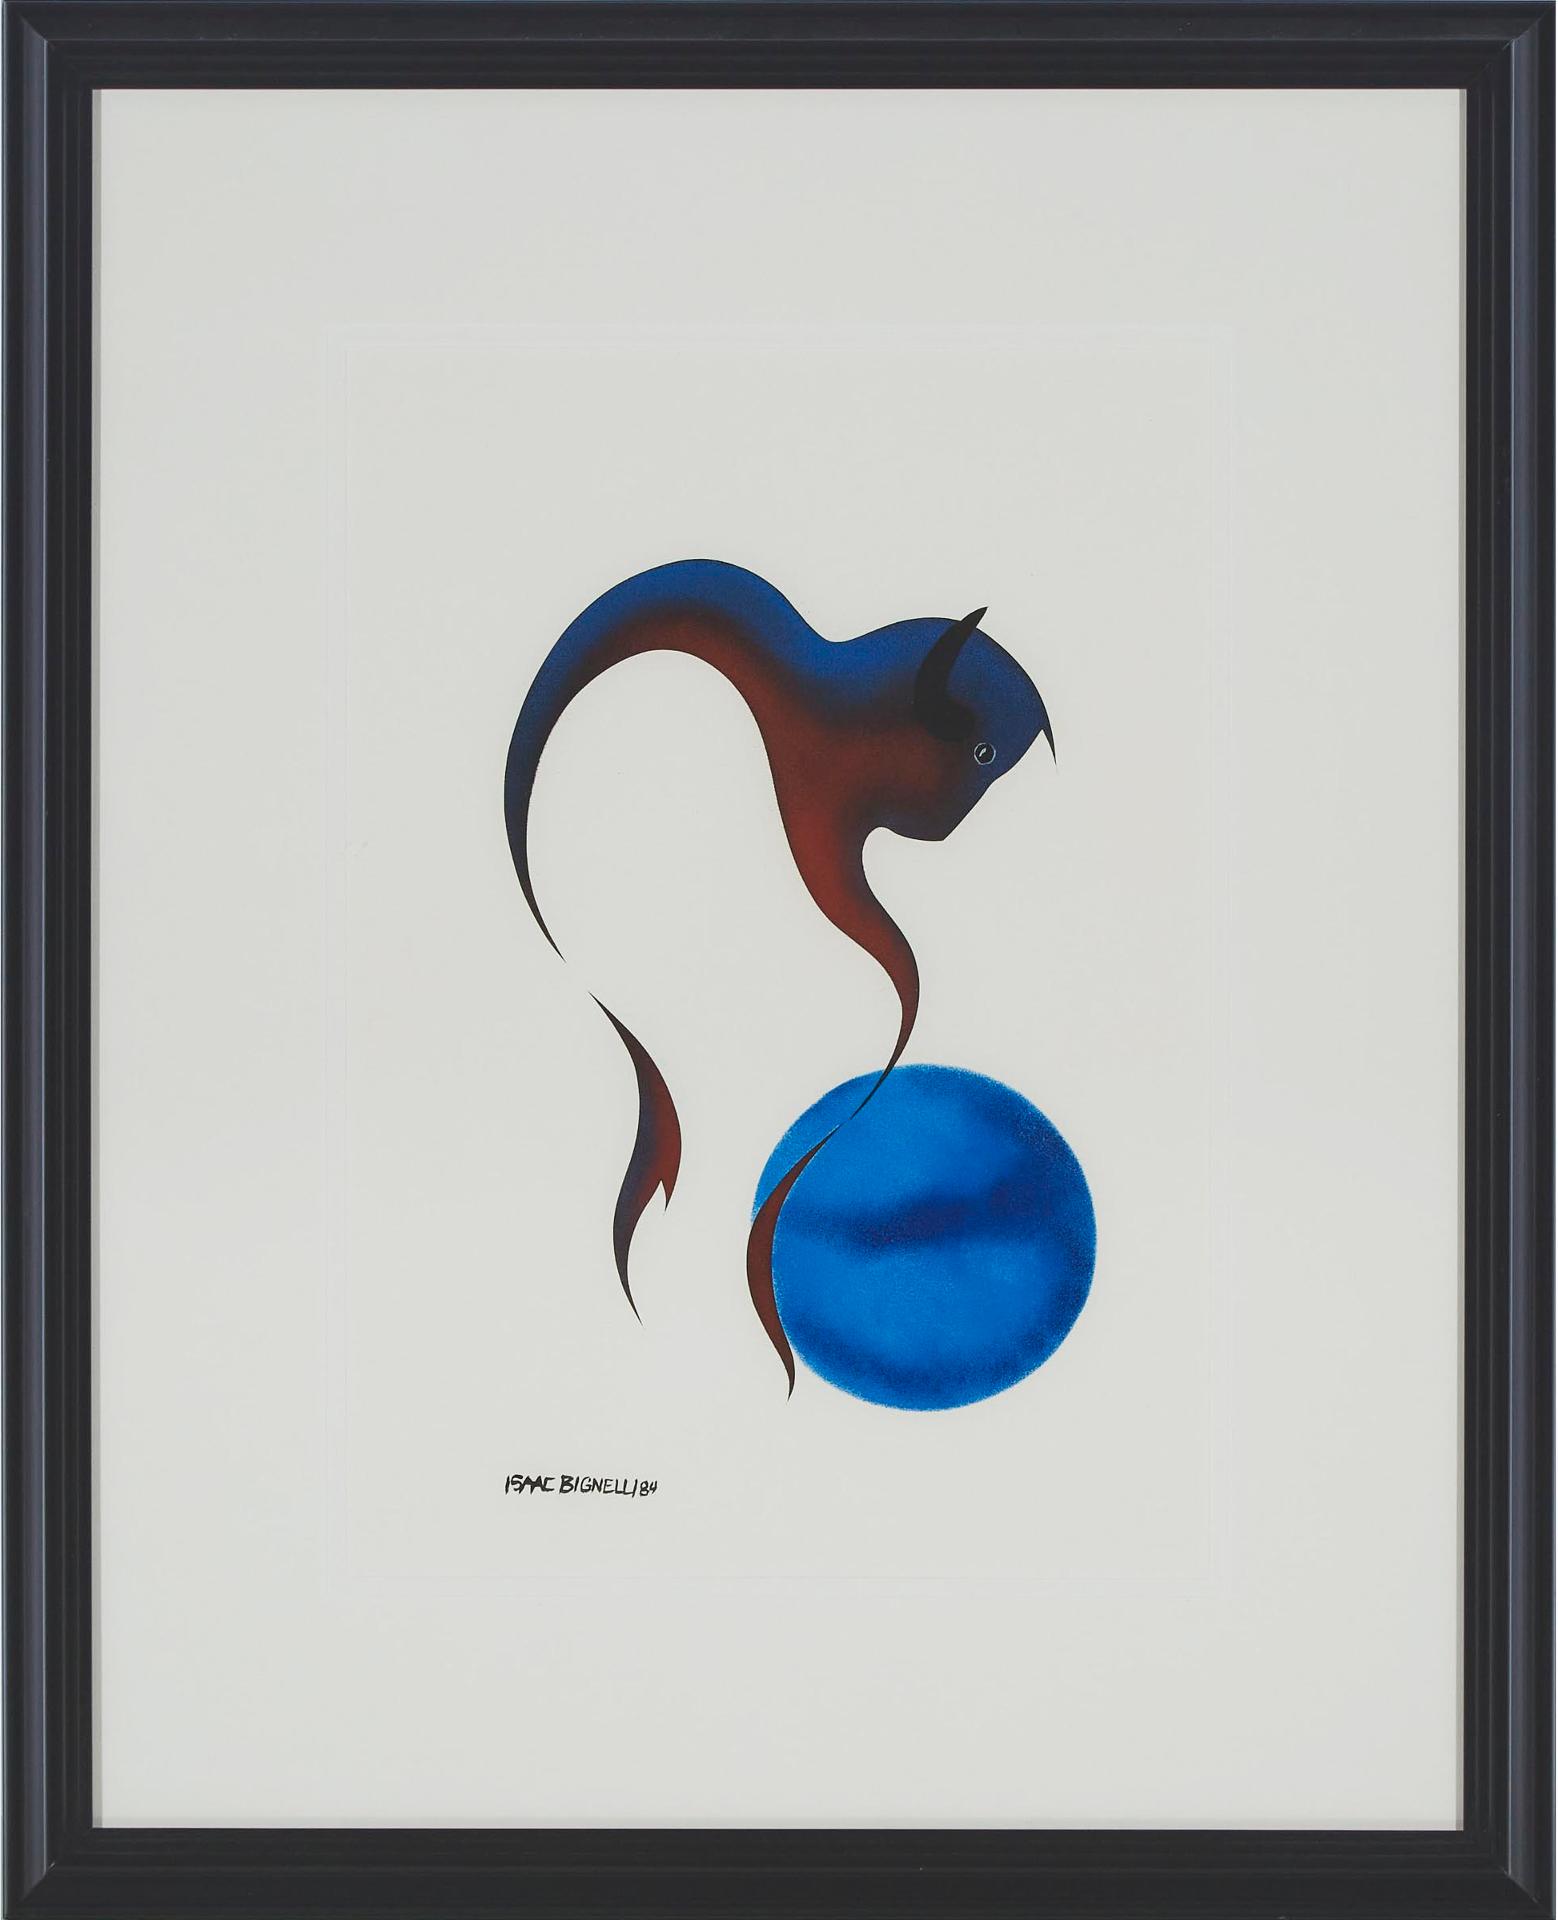 Isaac Bignell (1960-1995) - Untitled (Buffalo), 1984